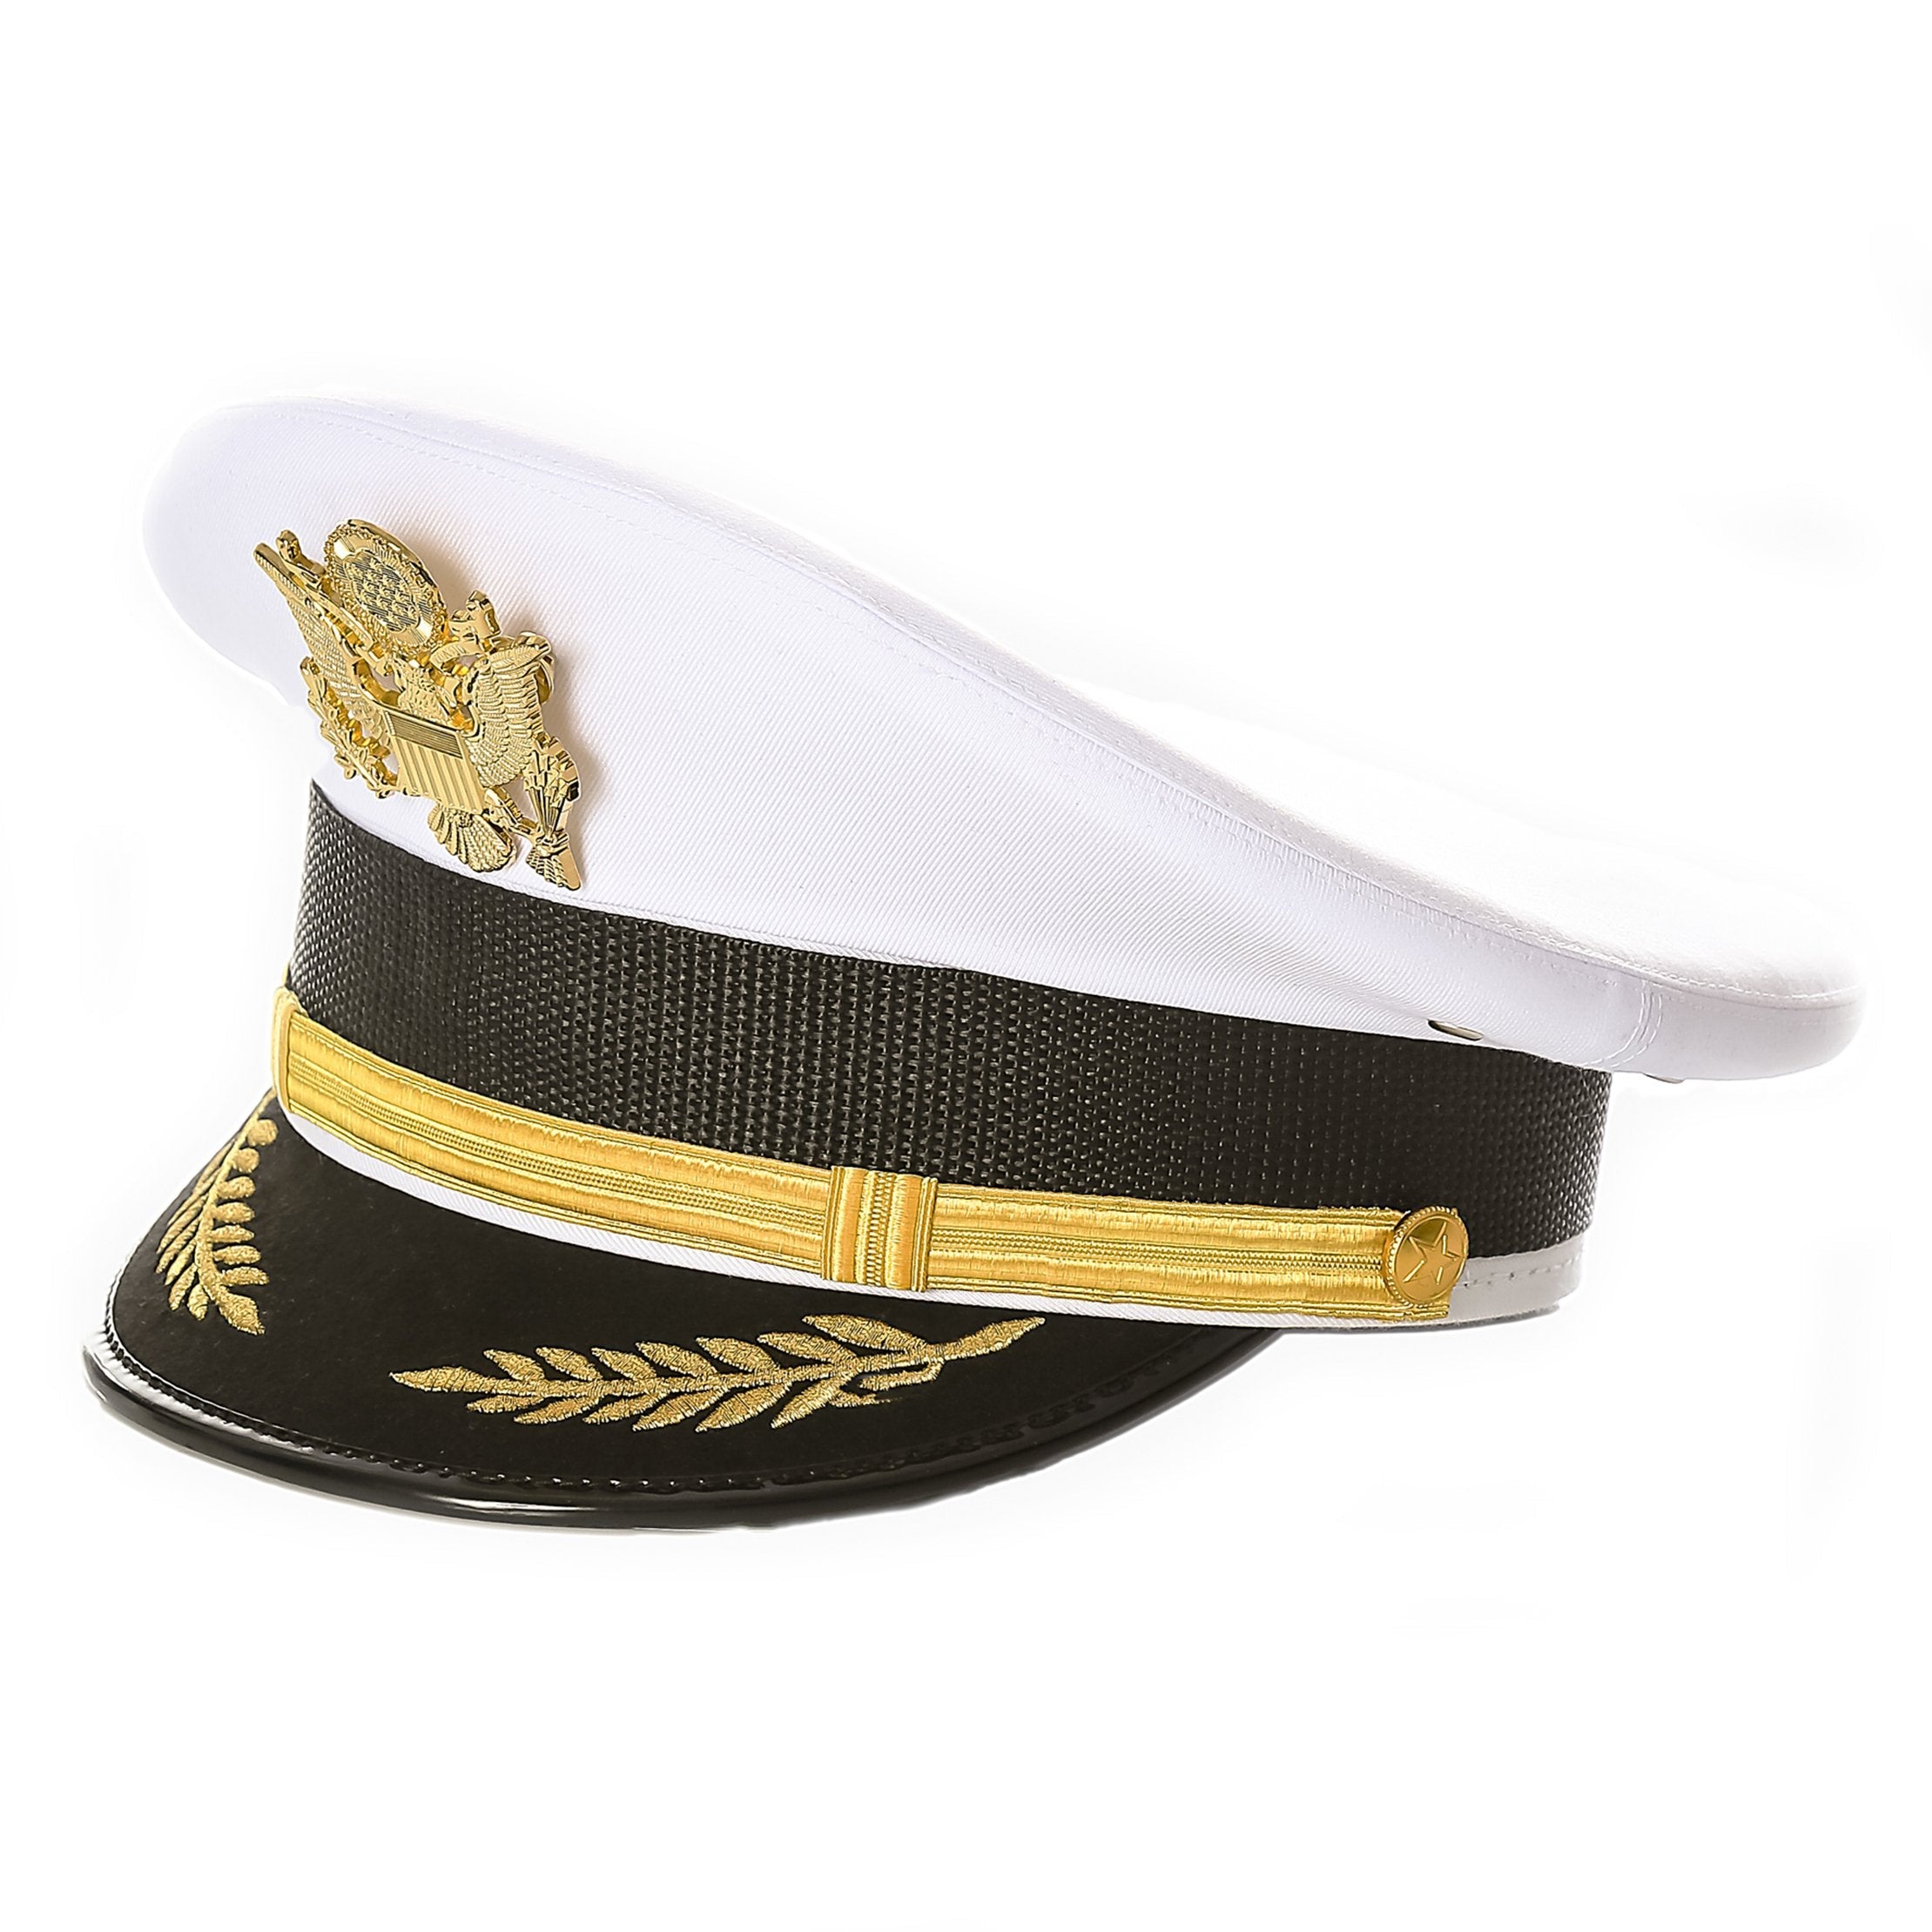 Ferrecci White Military Cadet Captain Sailor Hat Small/55cm